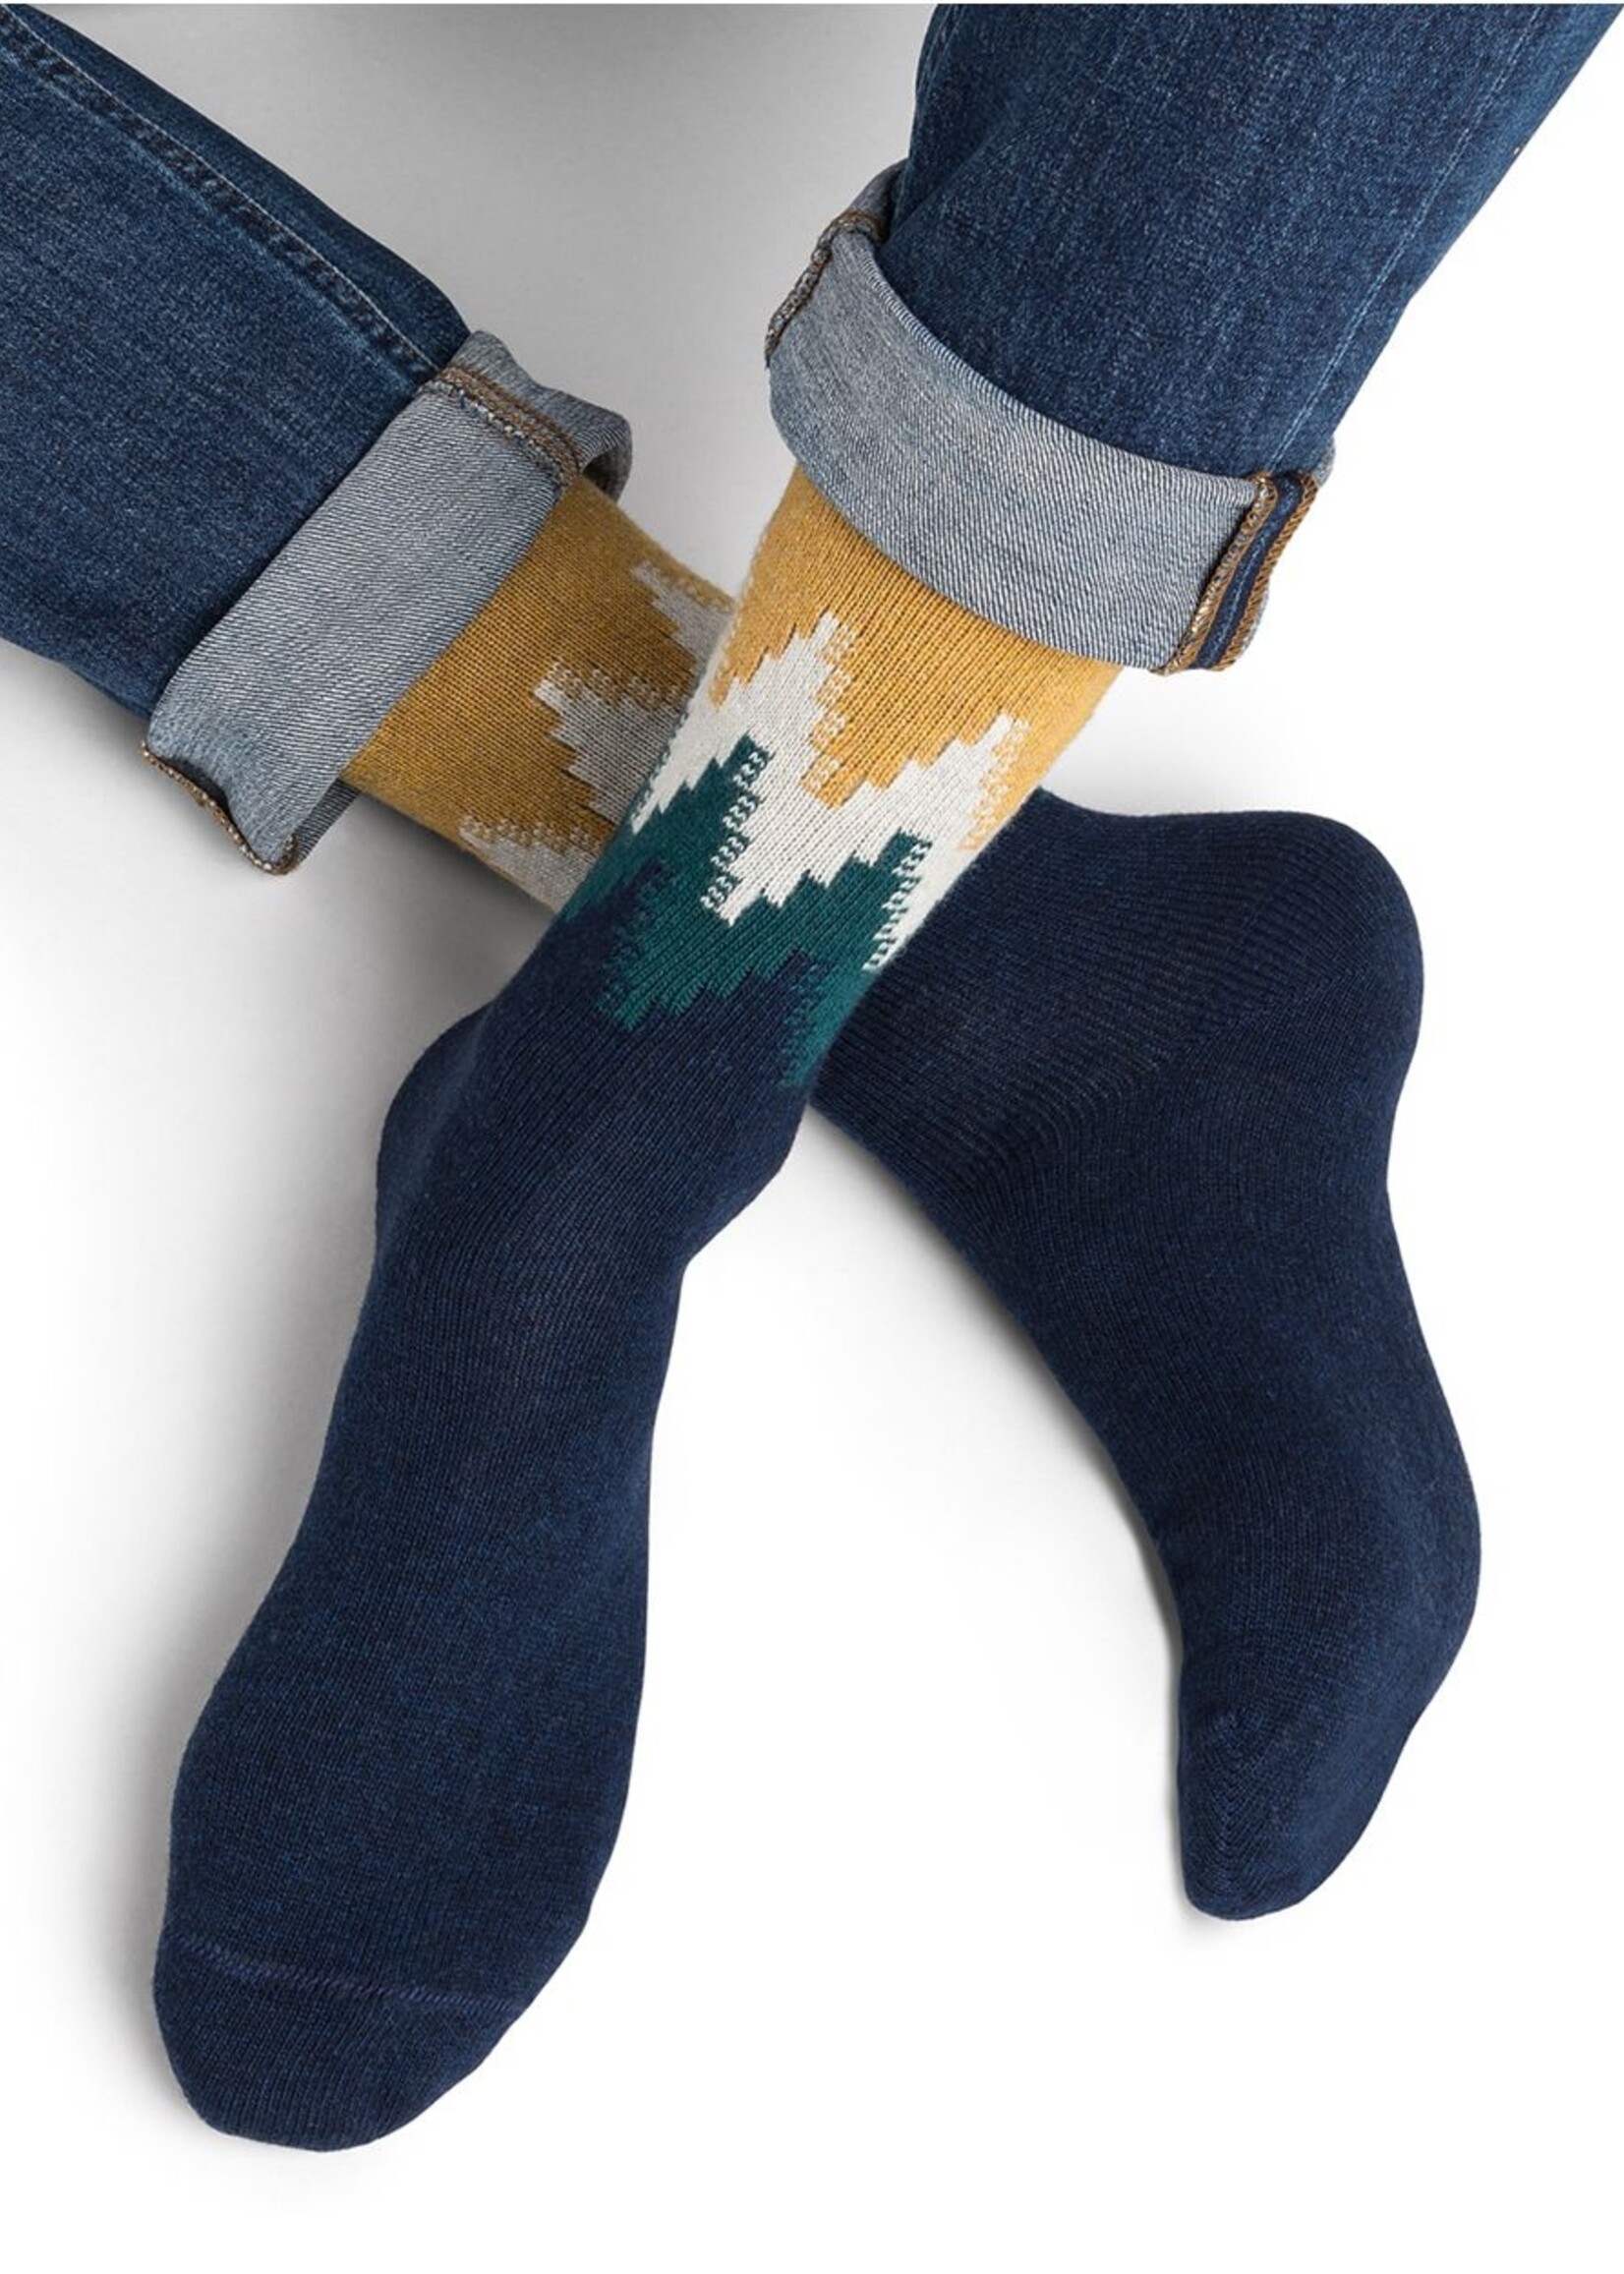 Bleuforet Men's Wool and Cashmere Socks with Herringbone Pattern 7004